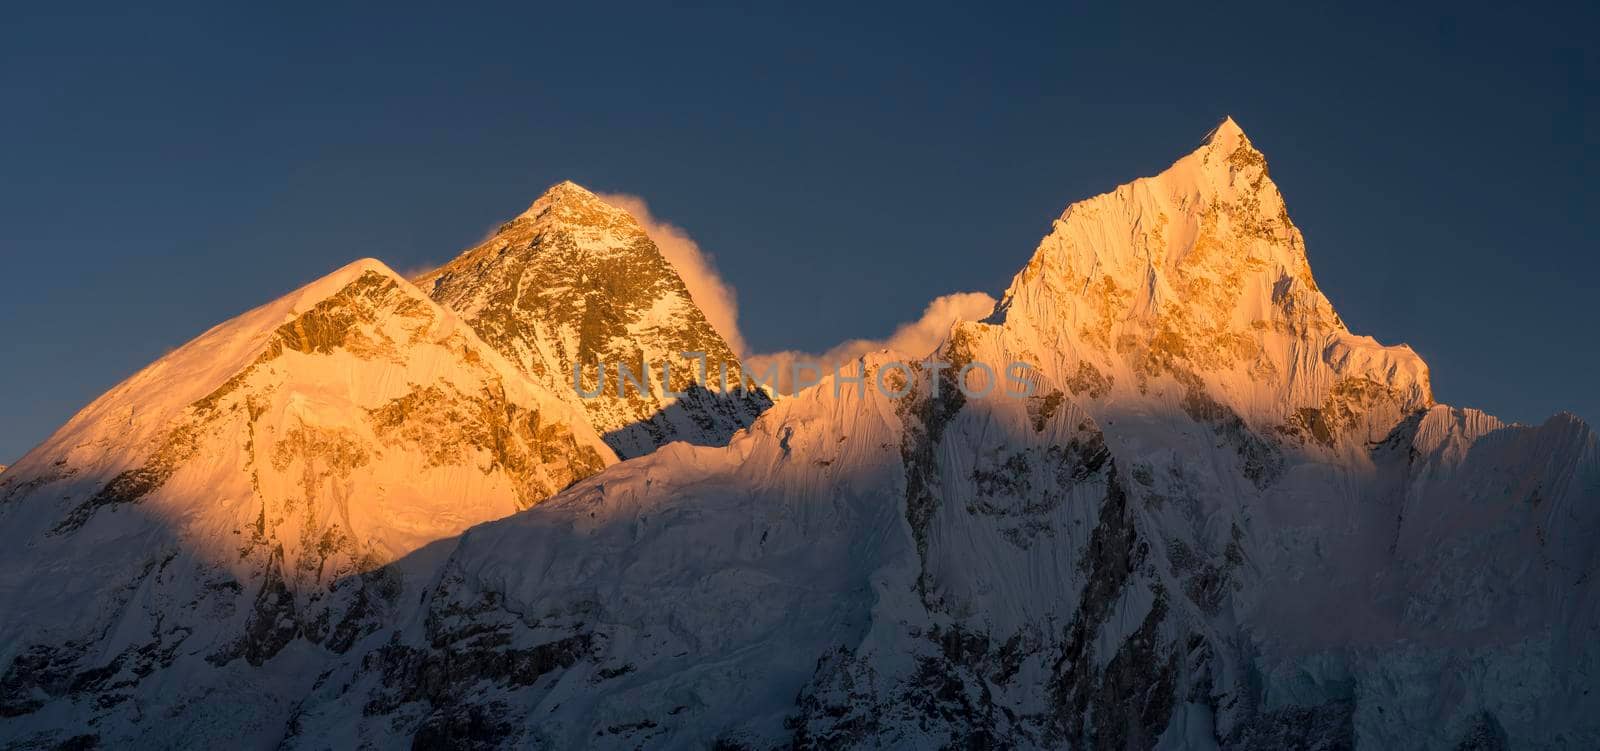 Everest and Nuptse summits at sunset or sunrise. Everest base camp trek, tourism in Nepal